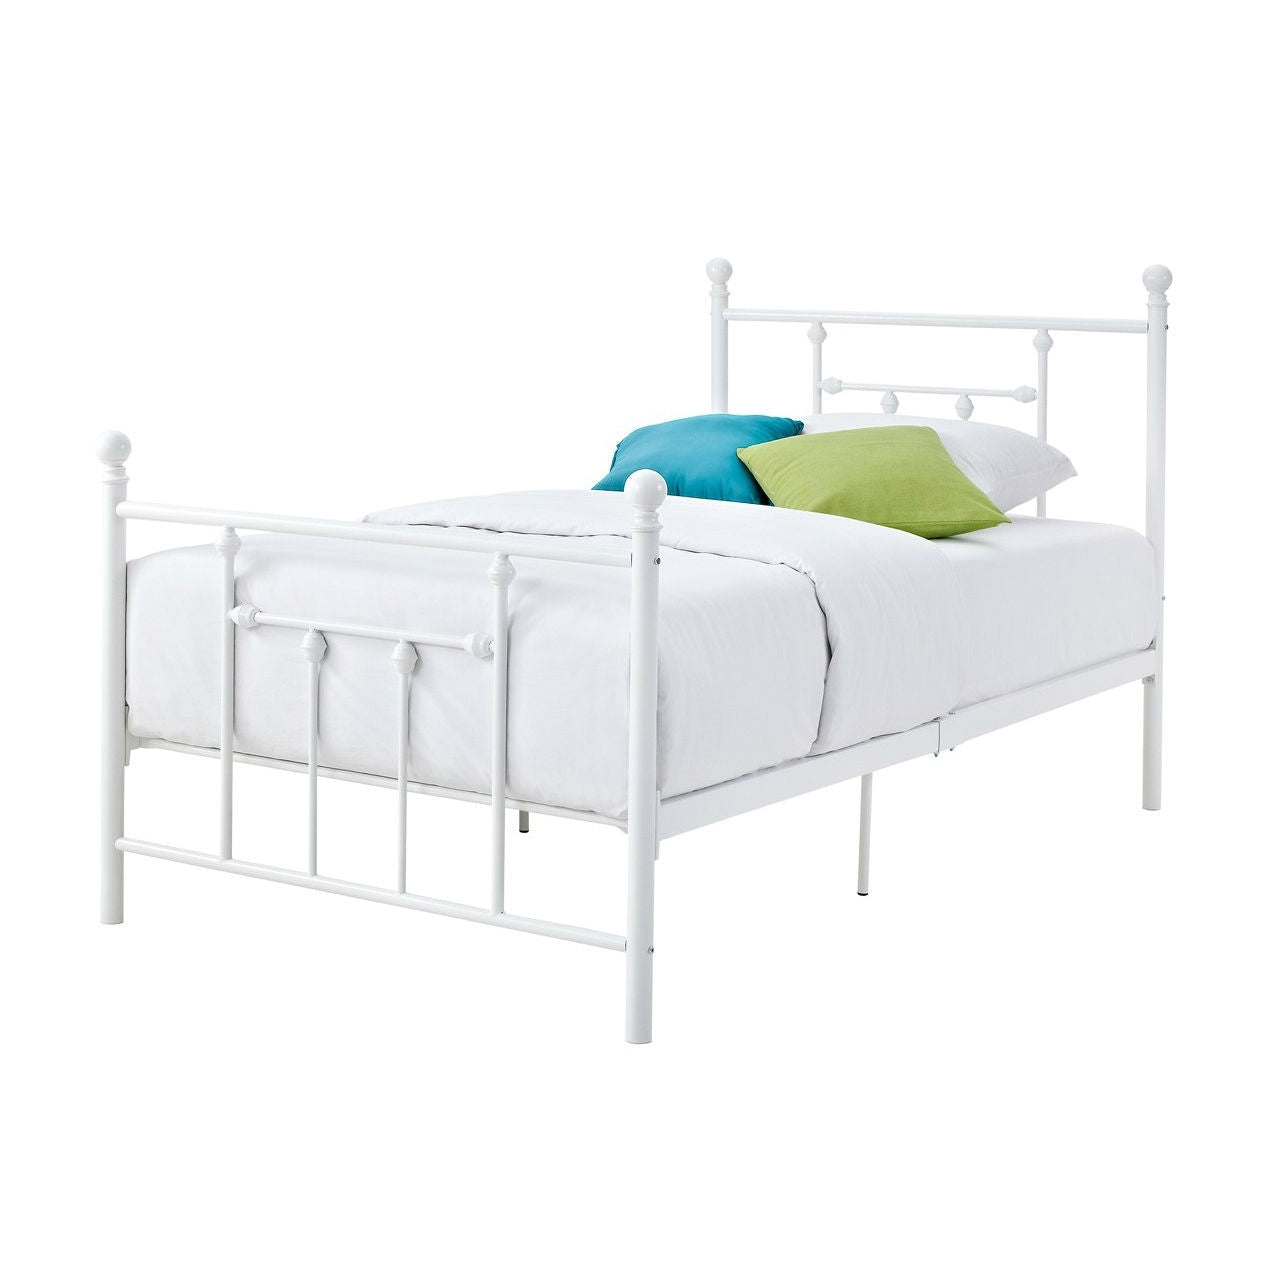 Bedroom > Bed Frames > Platform Beds - Full Size White Metal Platform Bed With Headboard And Footboard